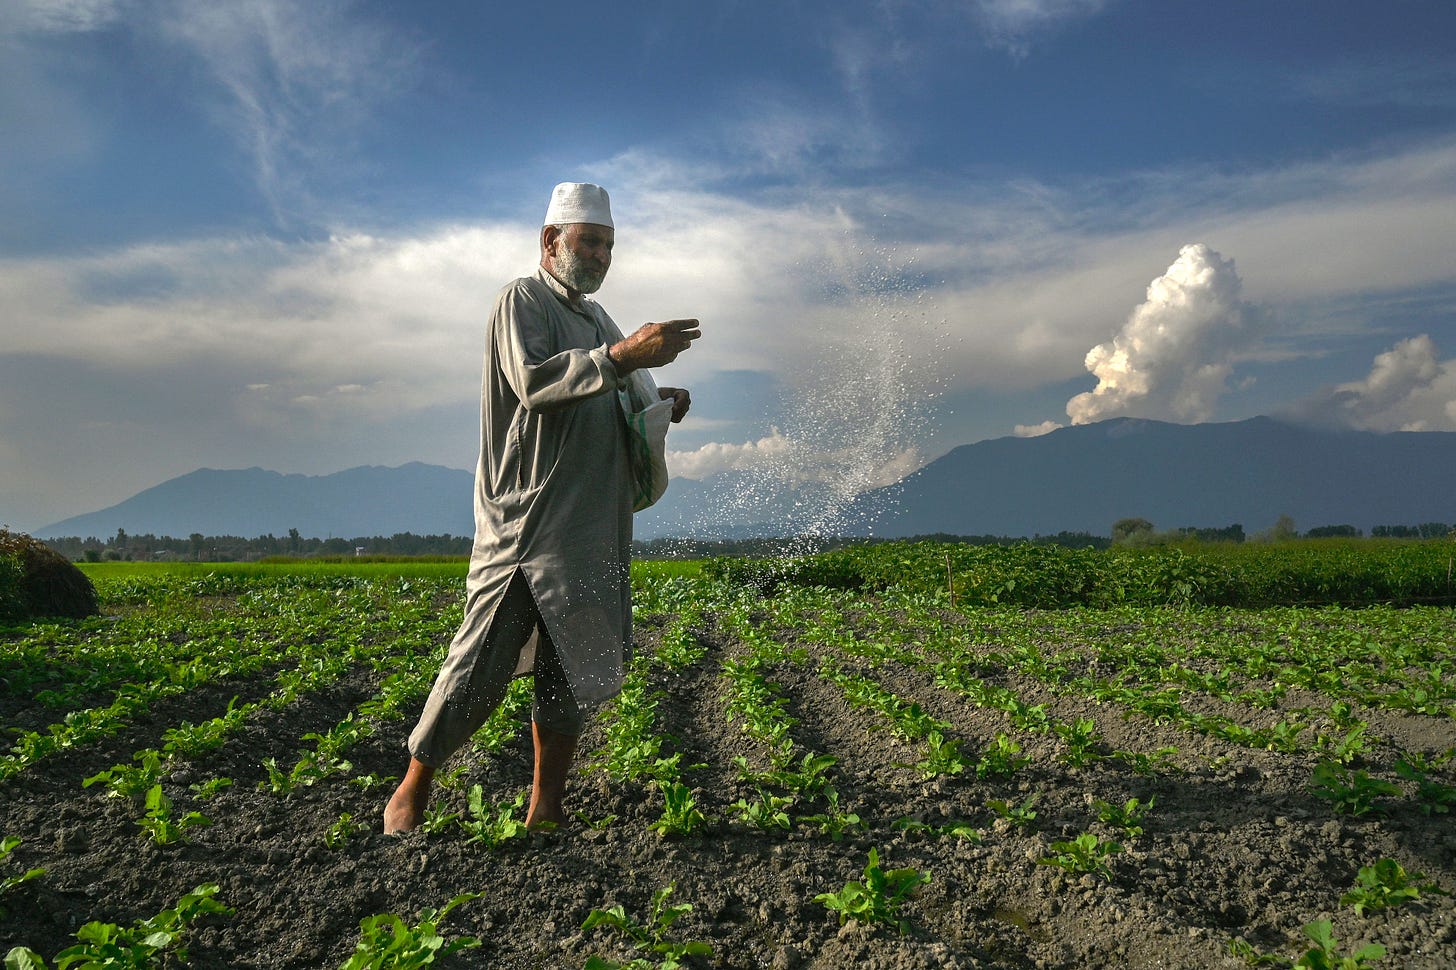 A farmer sprays fertilizer at a farm in the outskirts of Srinagar on July 19, 2022. (Photo by TAUSEEF MUSTAFA / AFP) (Photo by TAUSEEF MUSTAFA/AFP via Getty Images)